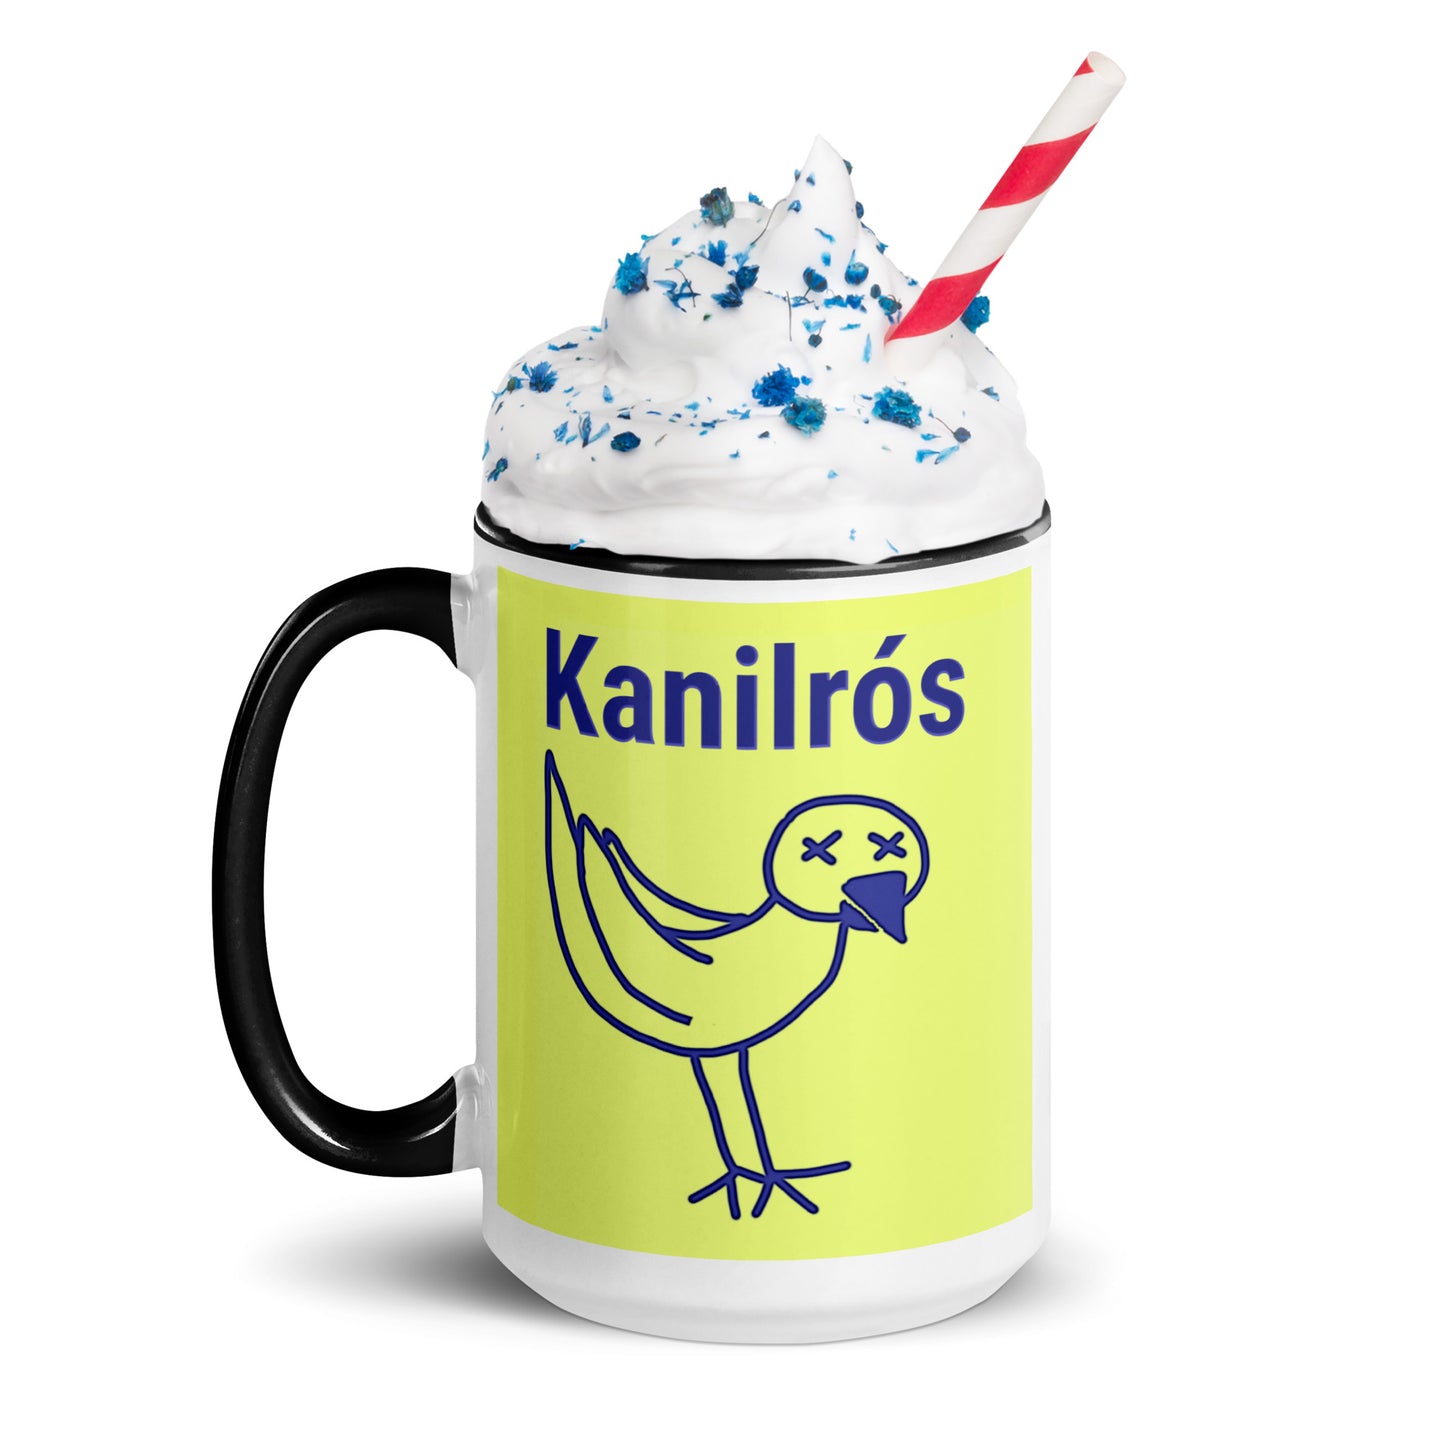 Kanilros Bird Mug With Color Inside